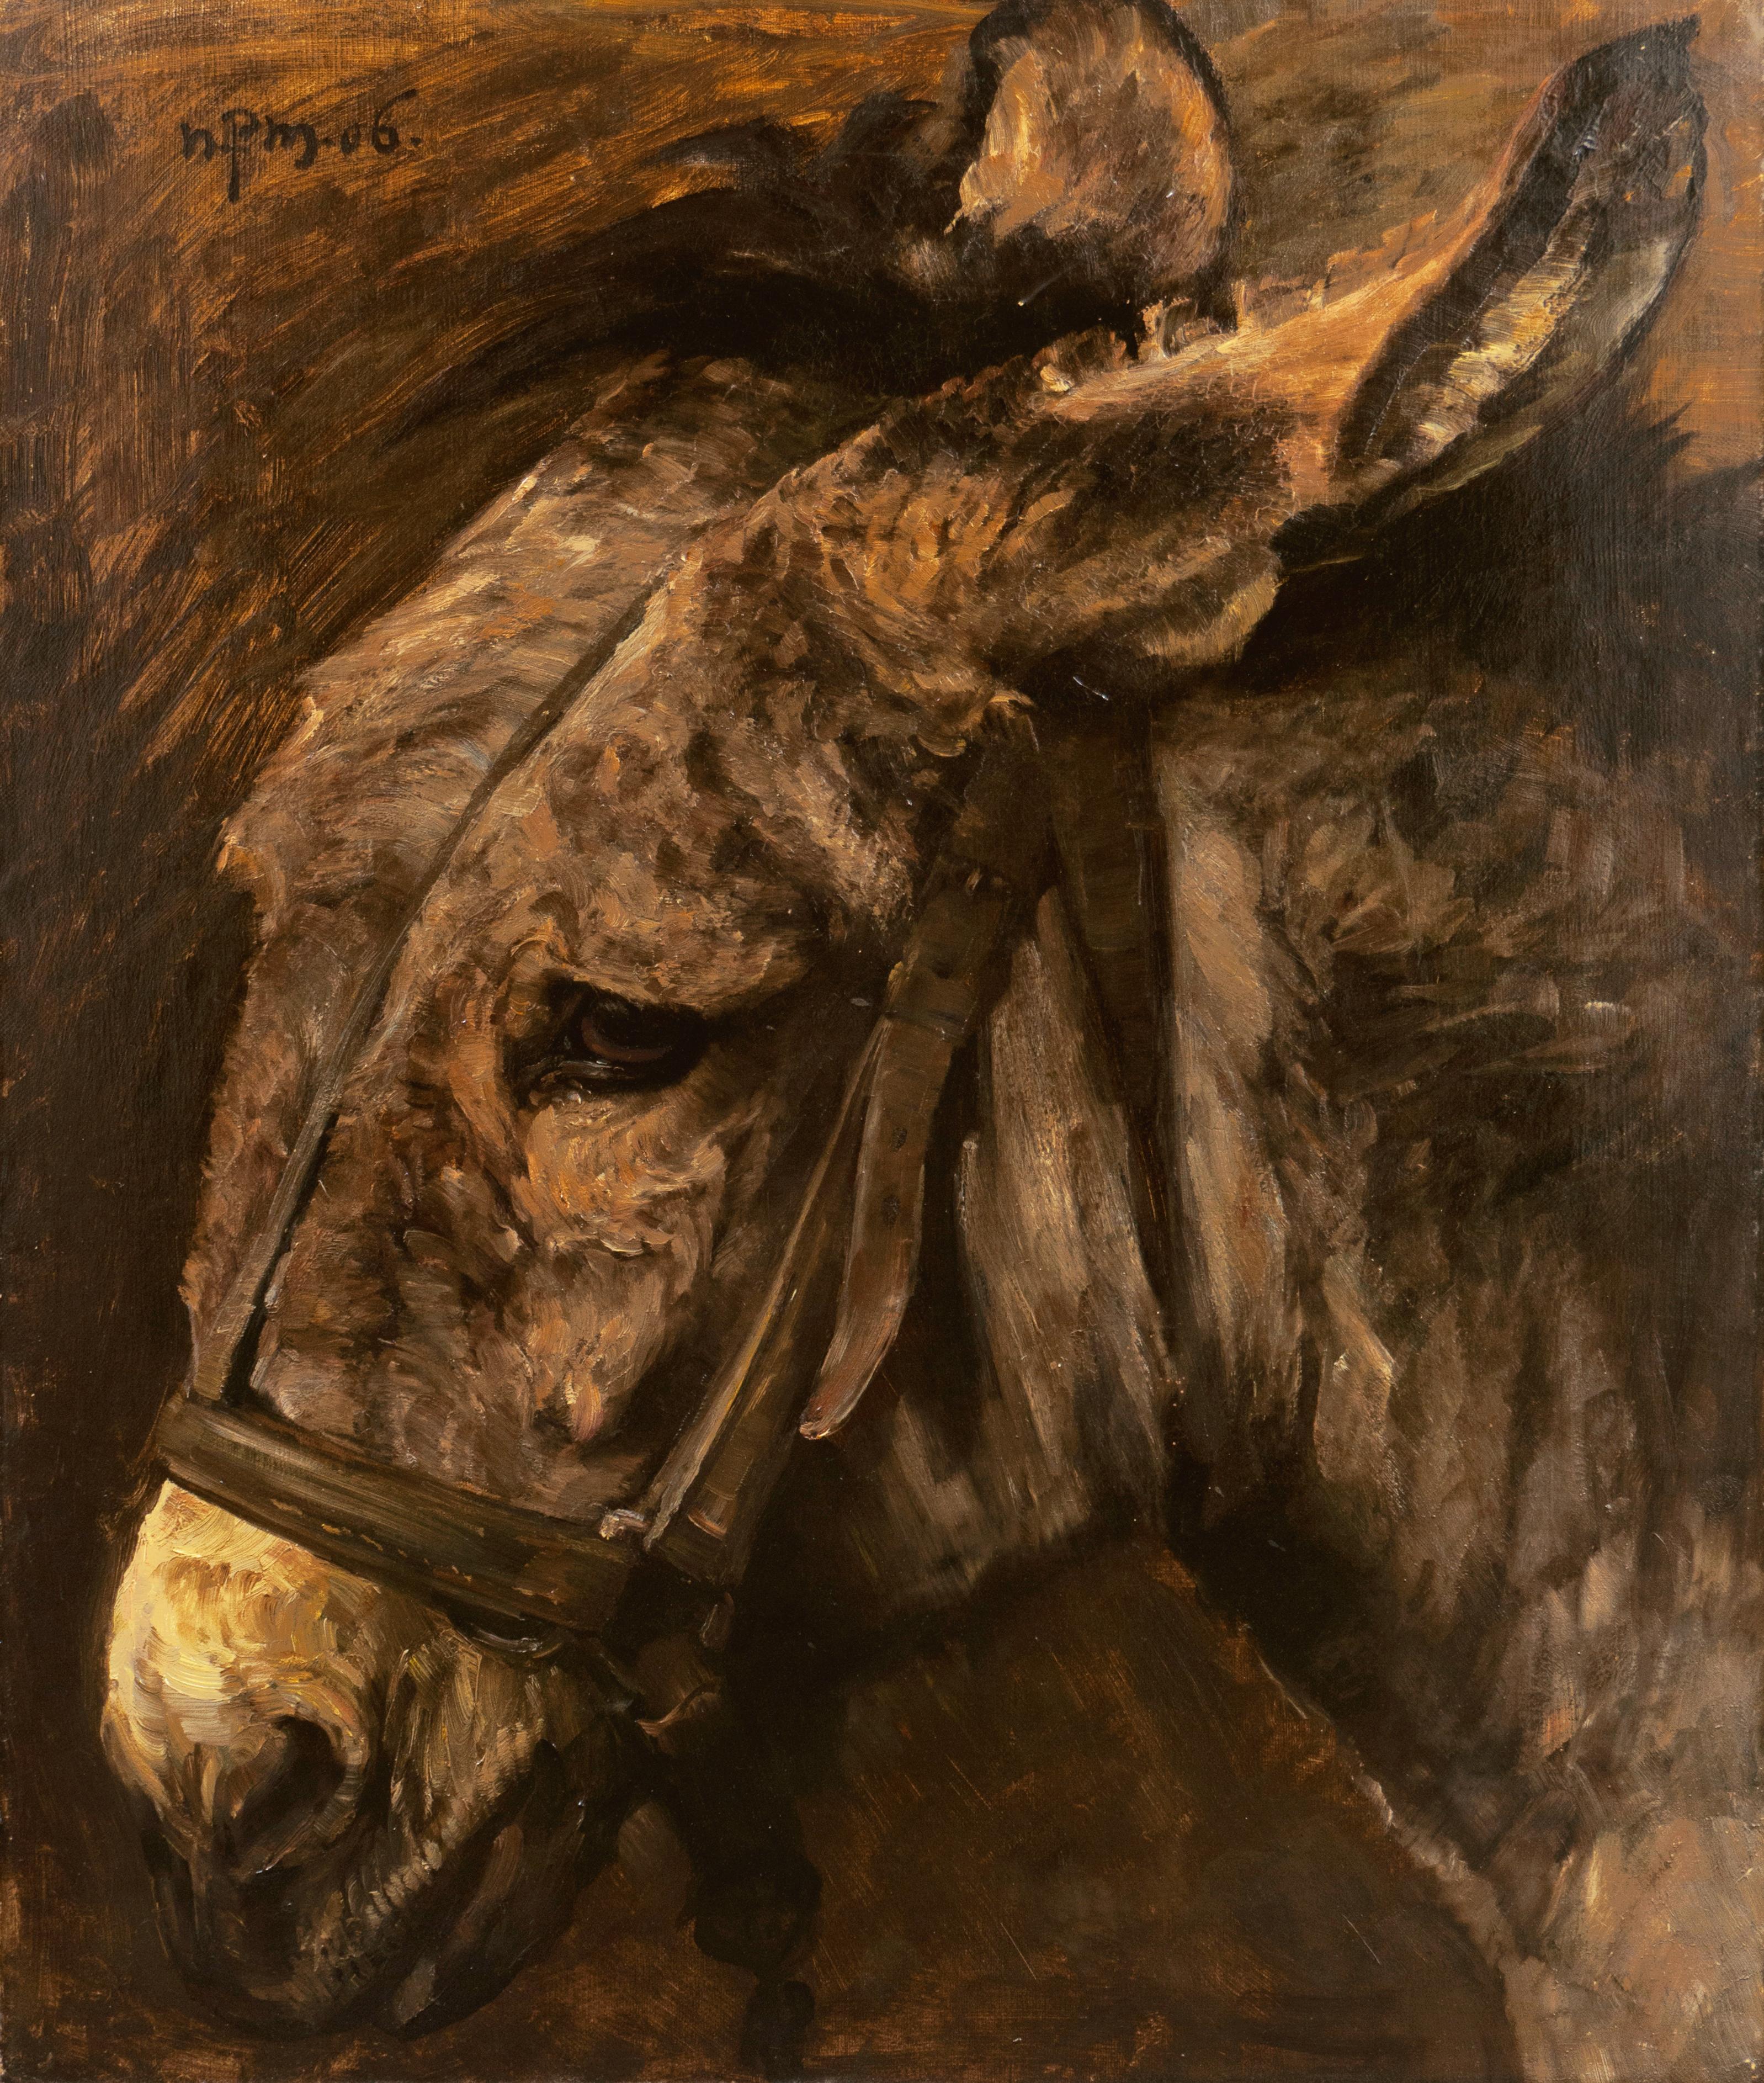 Niels Pederson Mols Animal Painting - 'Study of a Donkey', Paris Salon, Danish Royal Academy, Benezit, Thieme-Becker